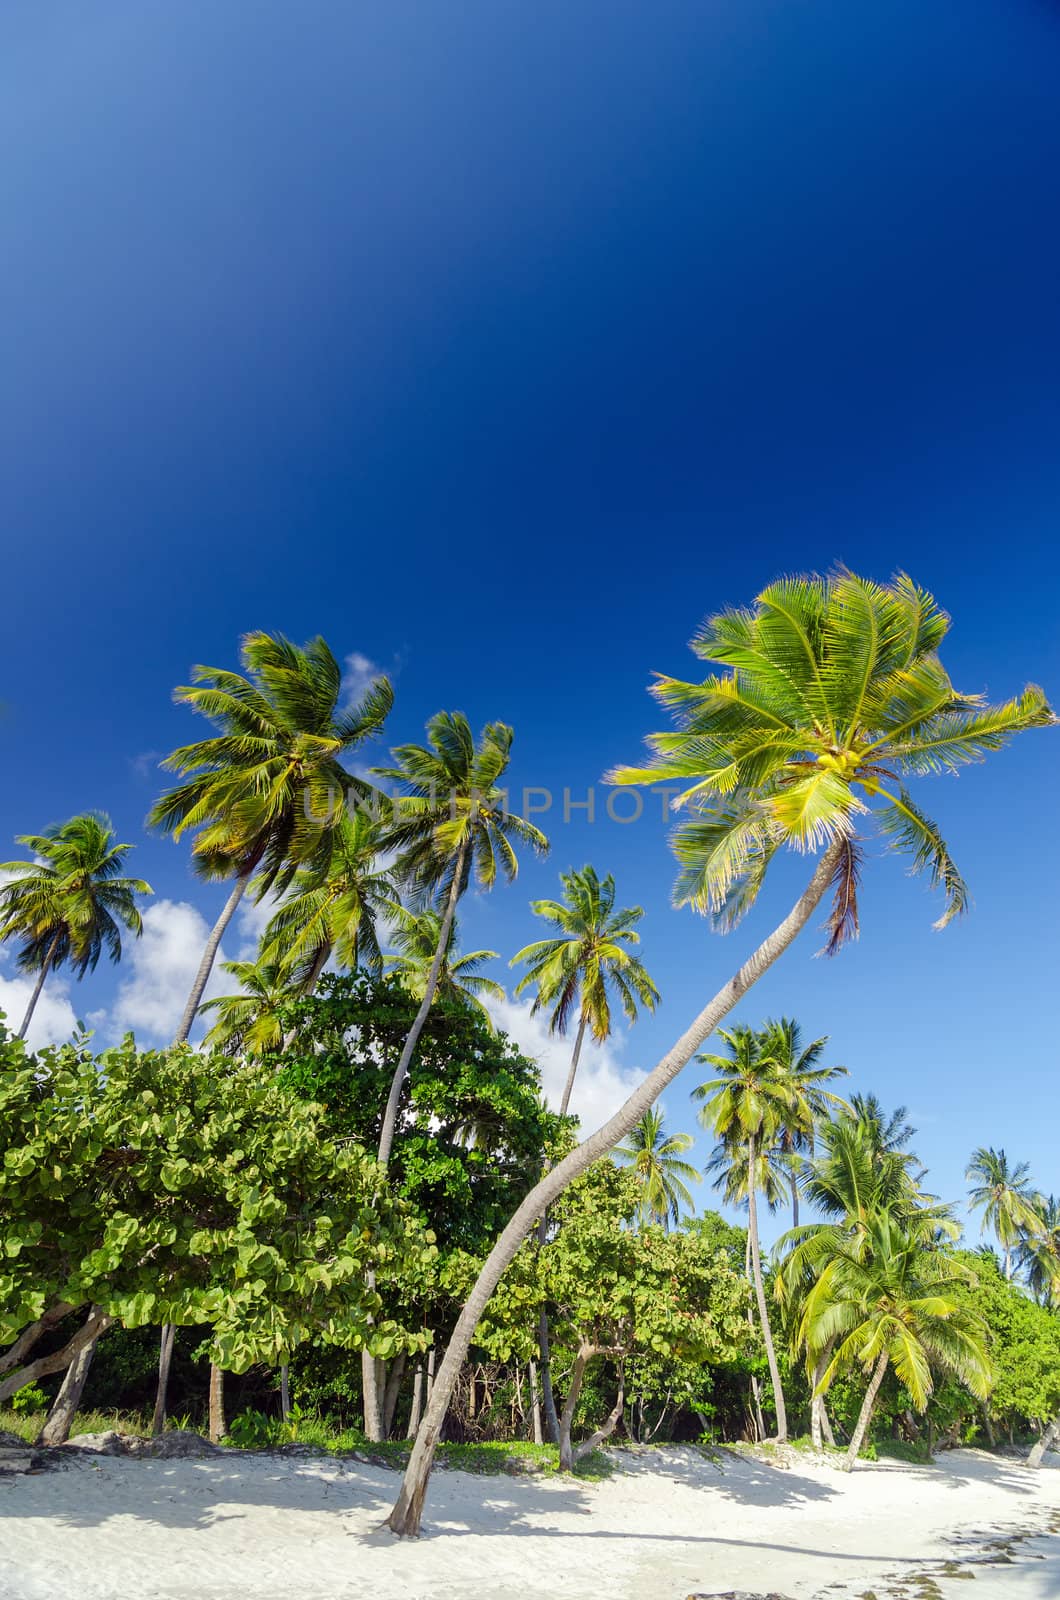 White sand beach and palm trees with deep blue sky